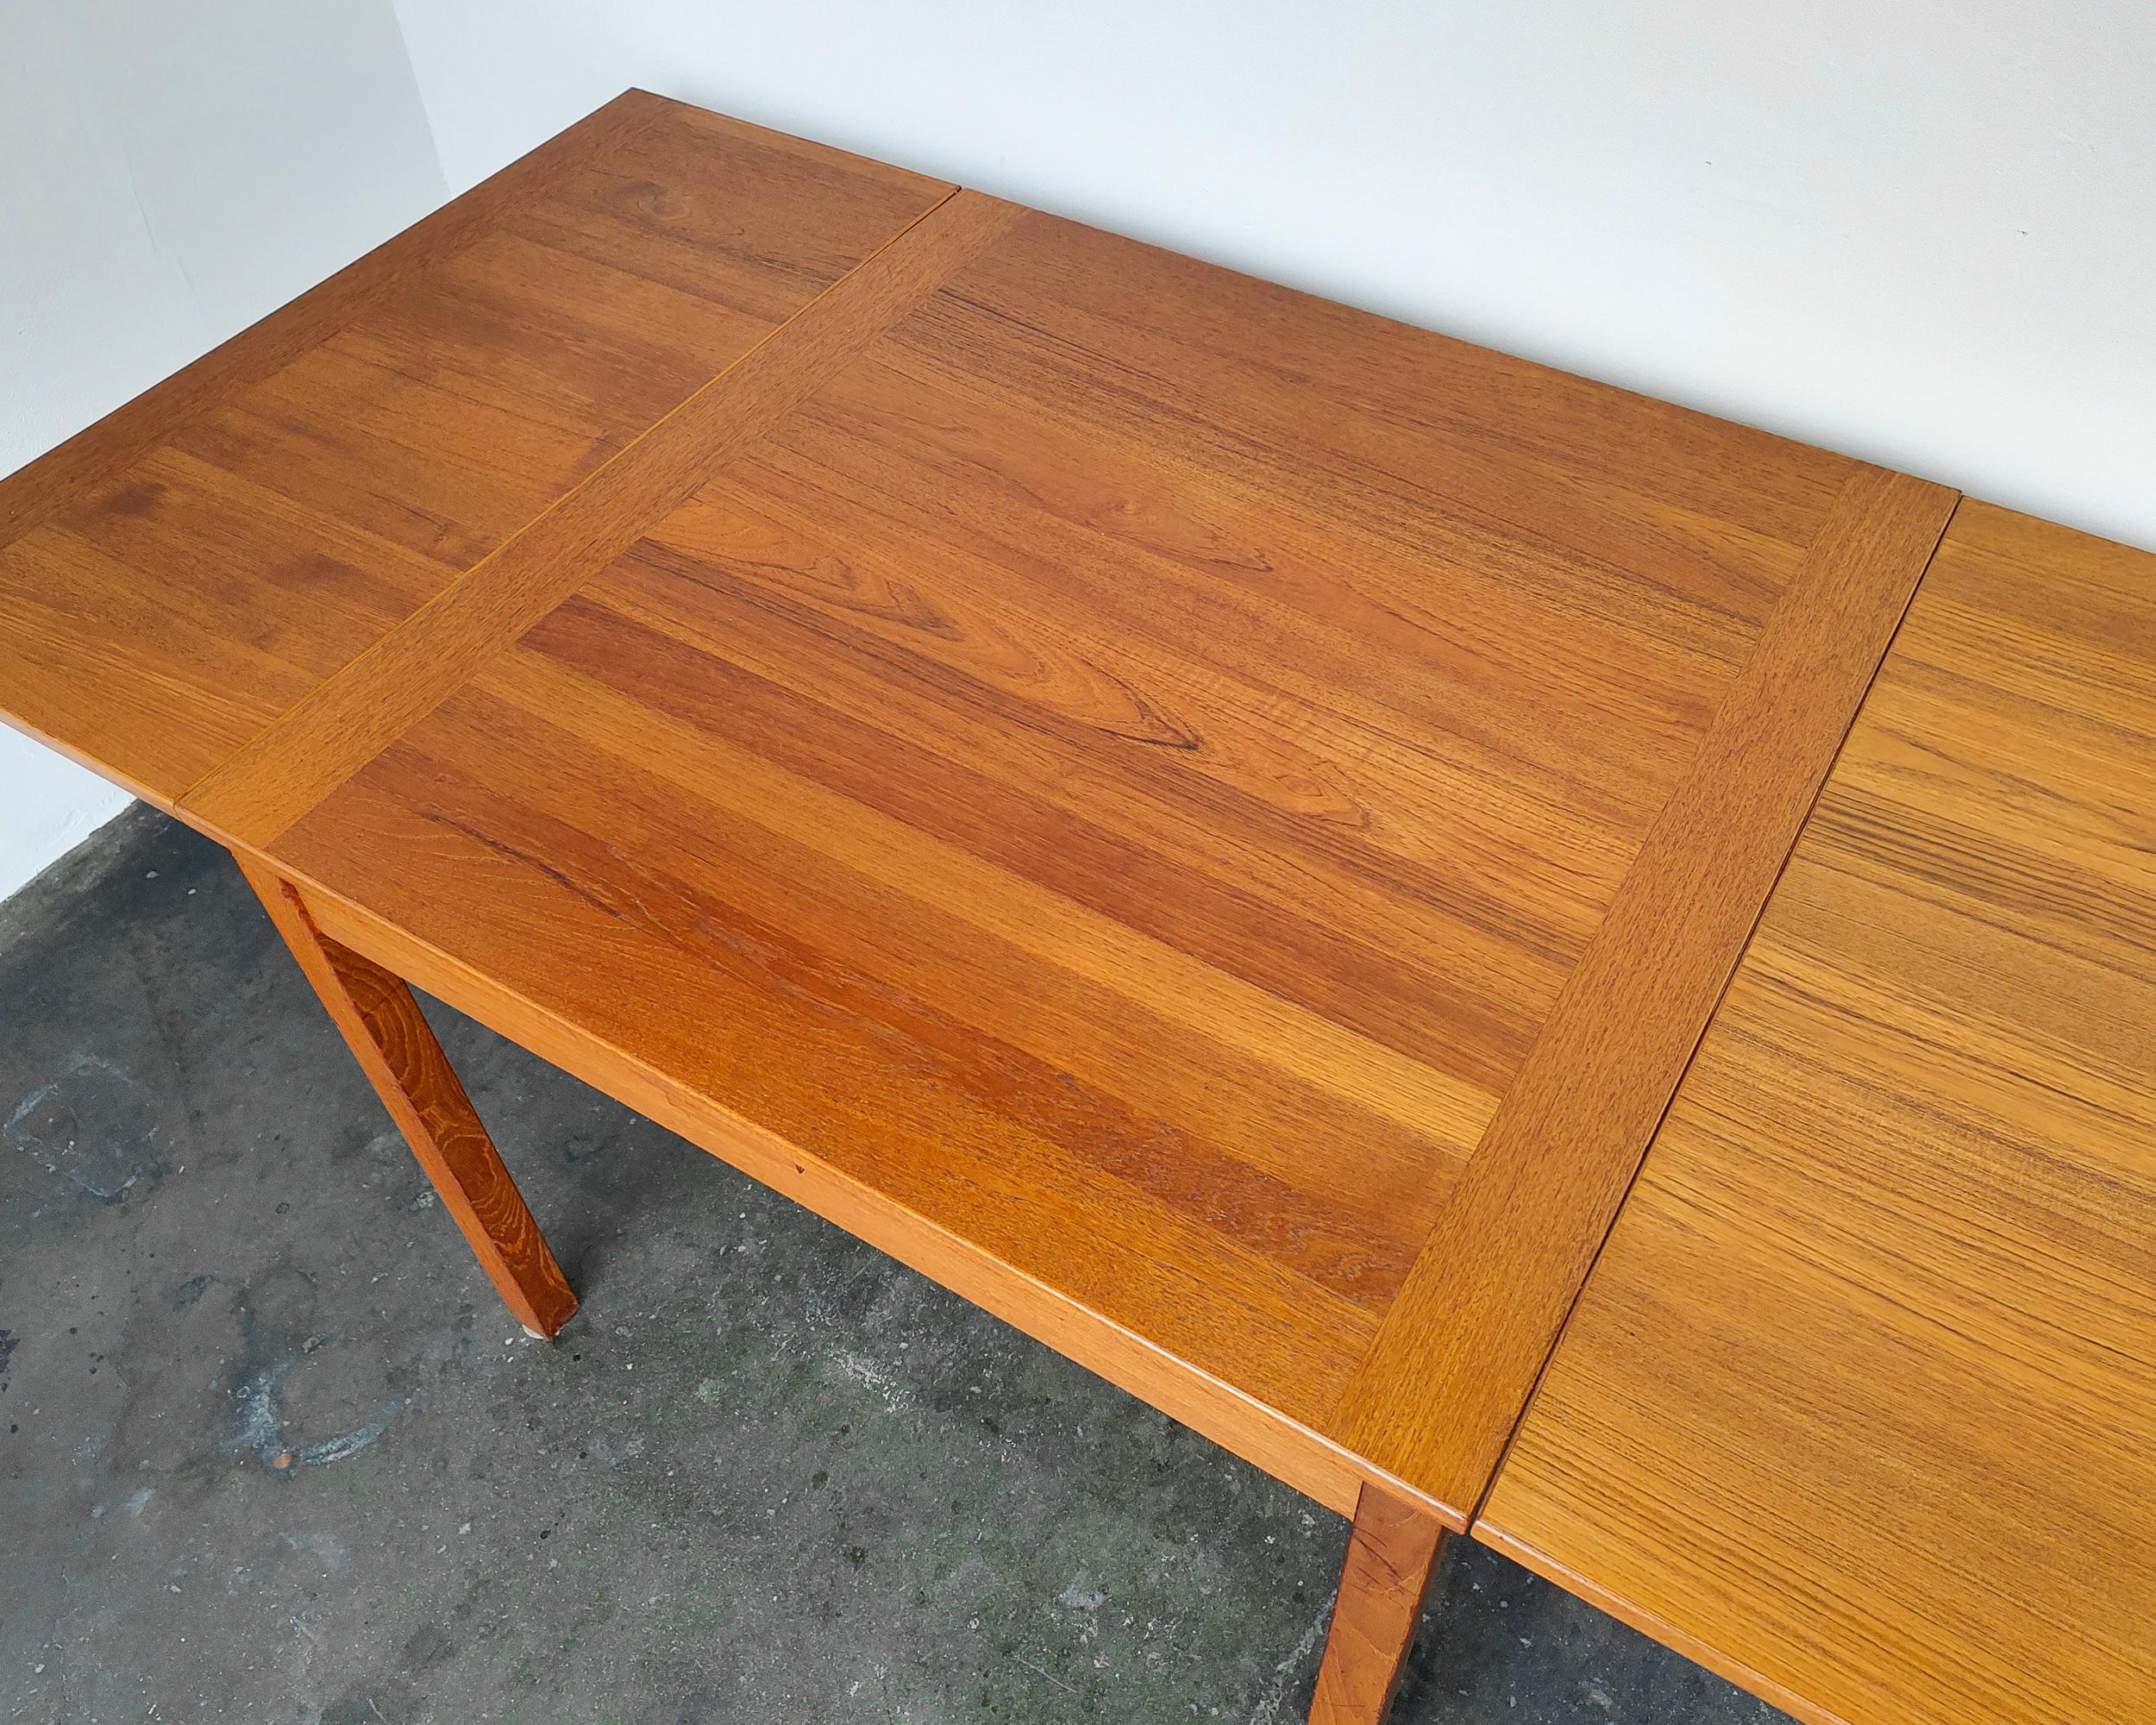 20th Century Mid-Century Modern Teak Wood Expanding Teak Dining Table 1960s For Sale